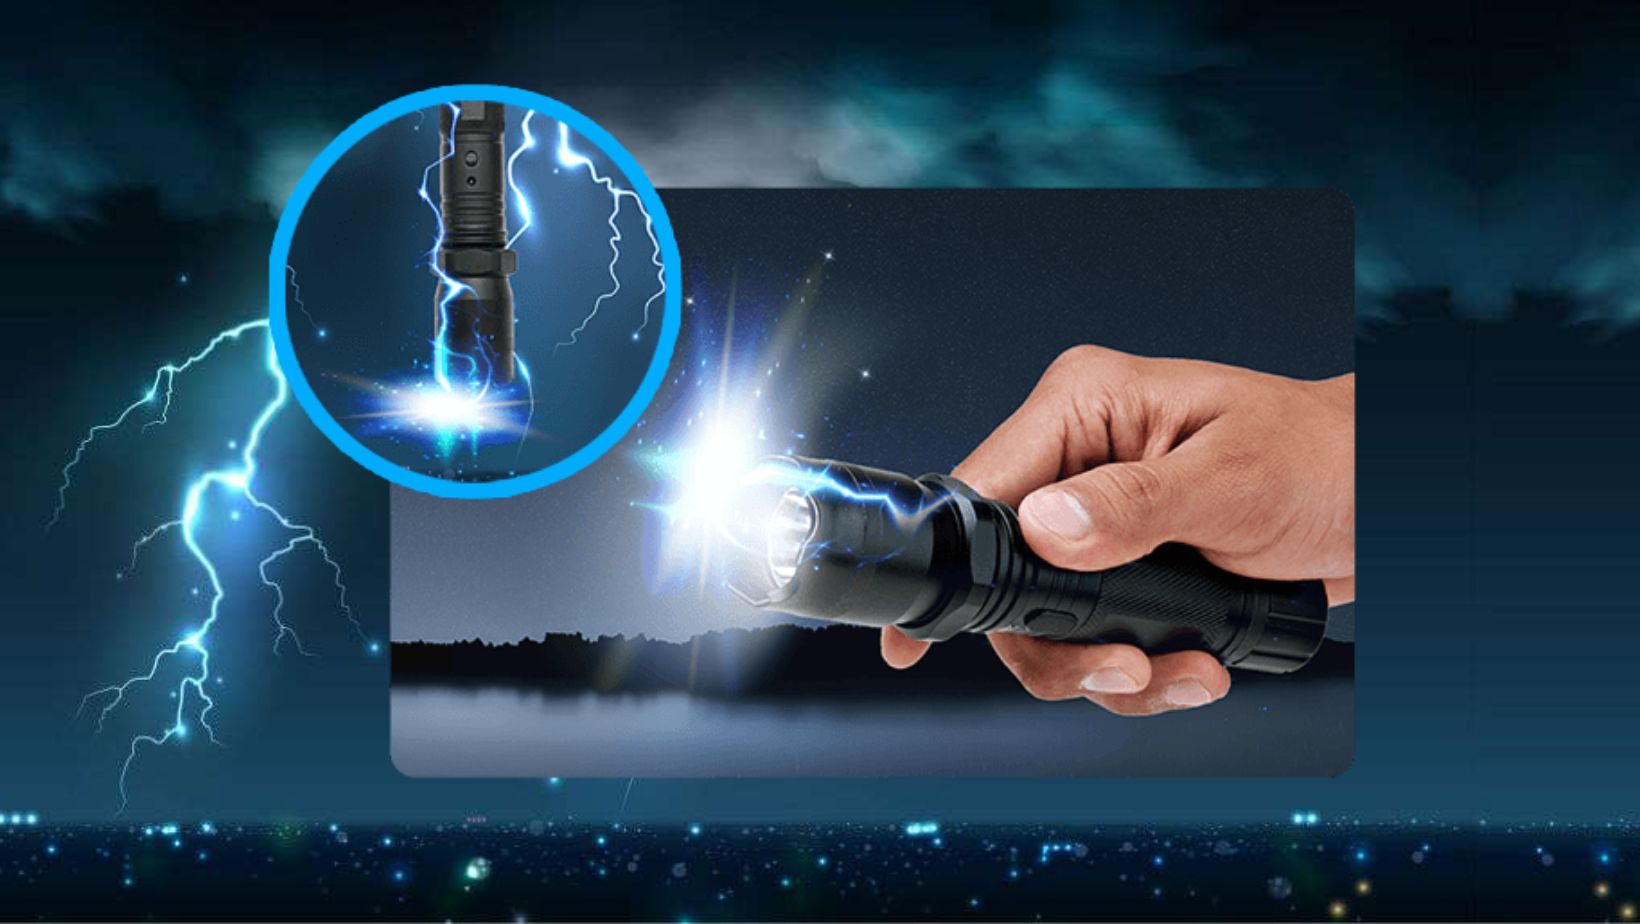 Tactical Shield Illuminate Your Safety with the StrikeForce Flashlight Stun Gun